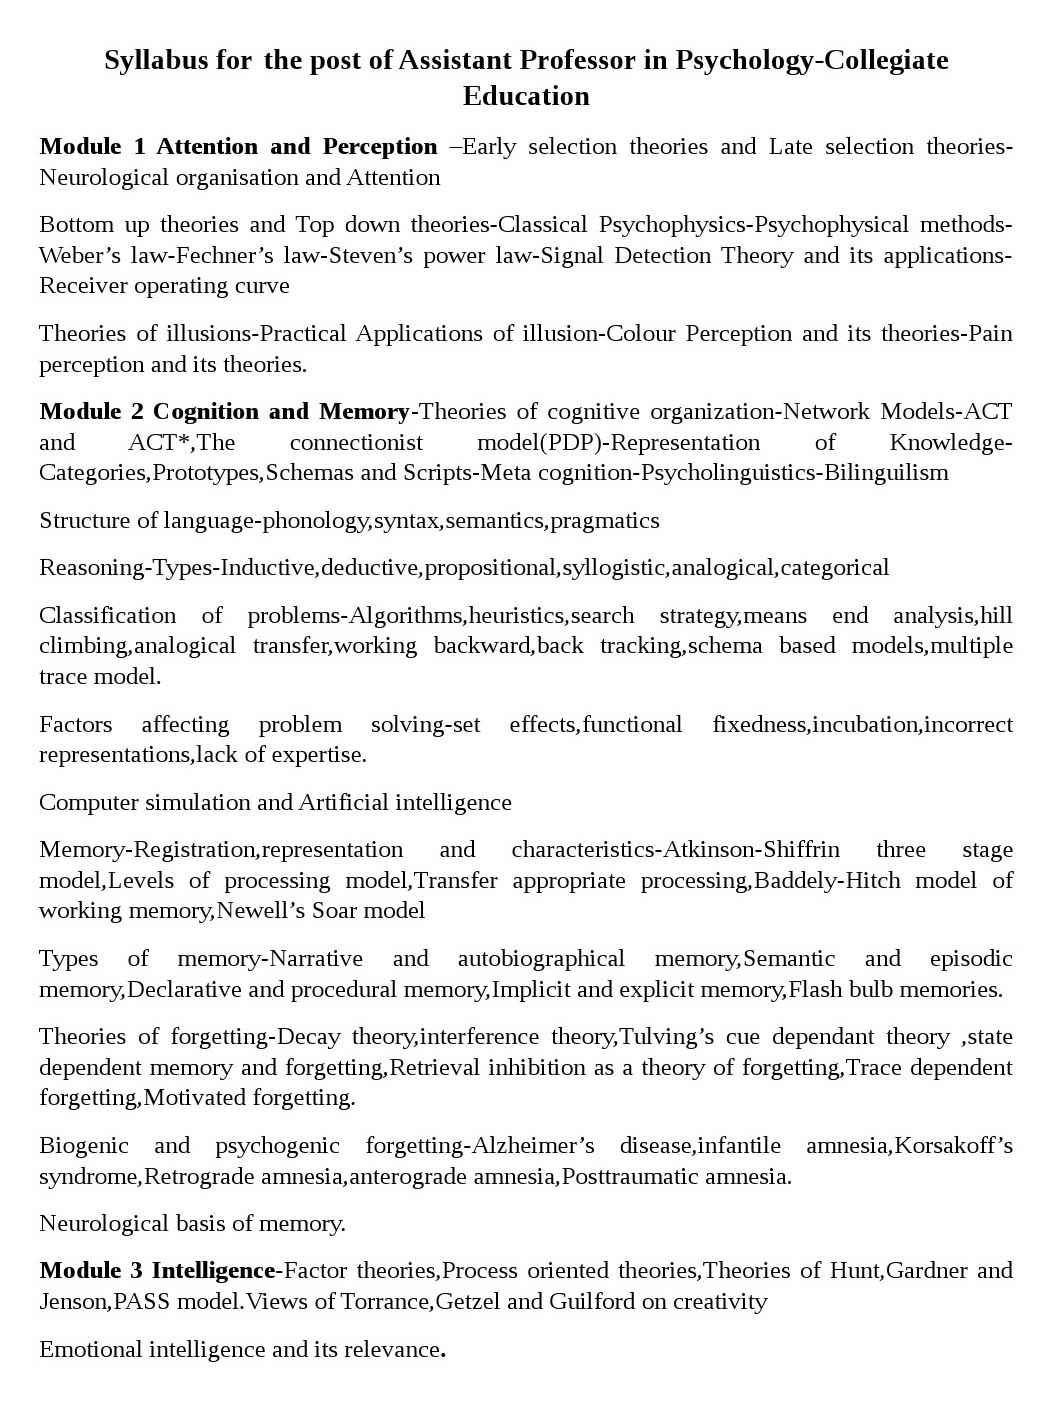 Kerala PSC Assistant Professor Psychology Exam Syllabus - Notification Image 1